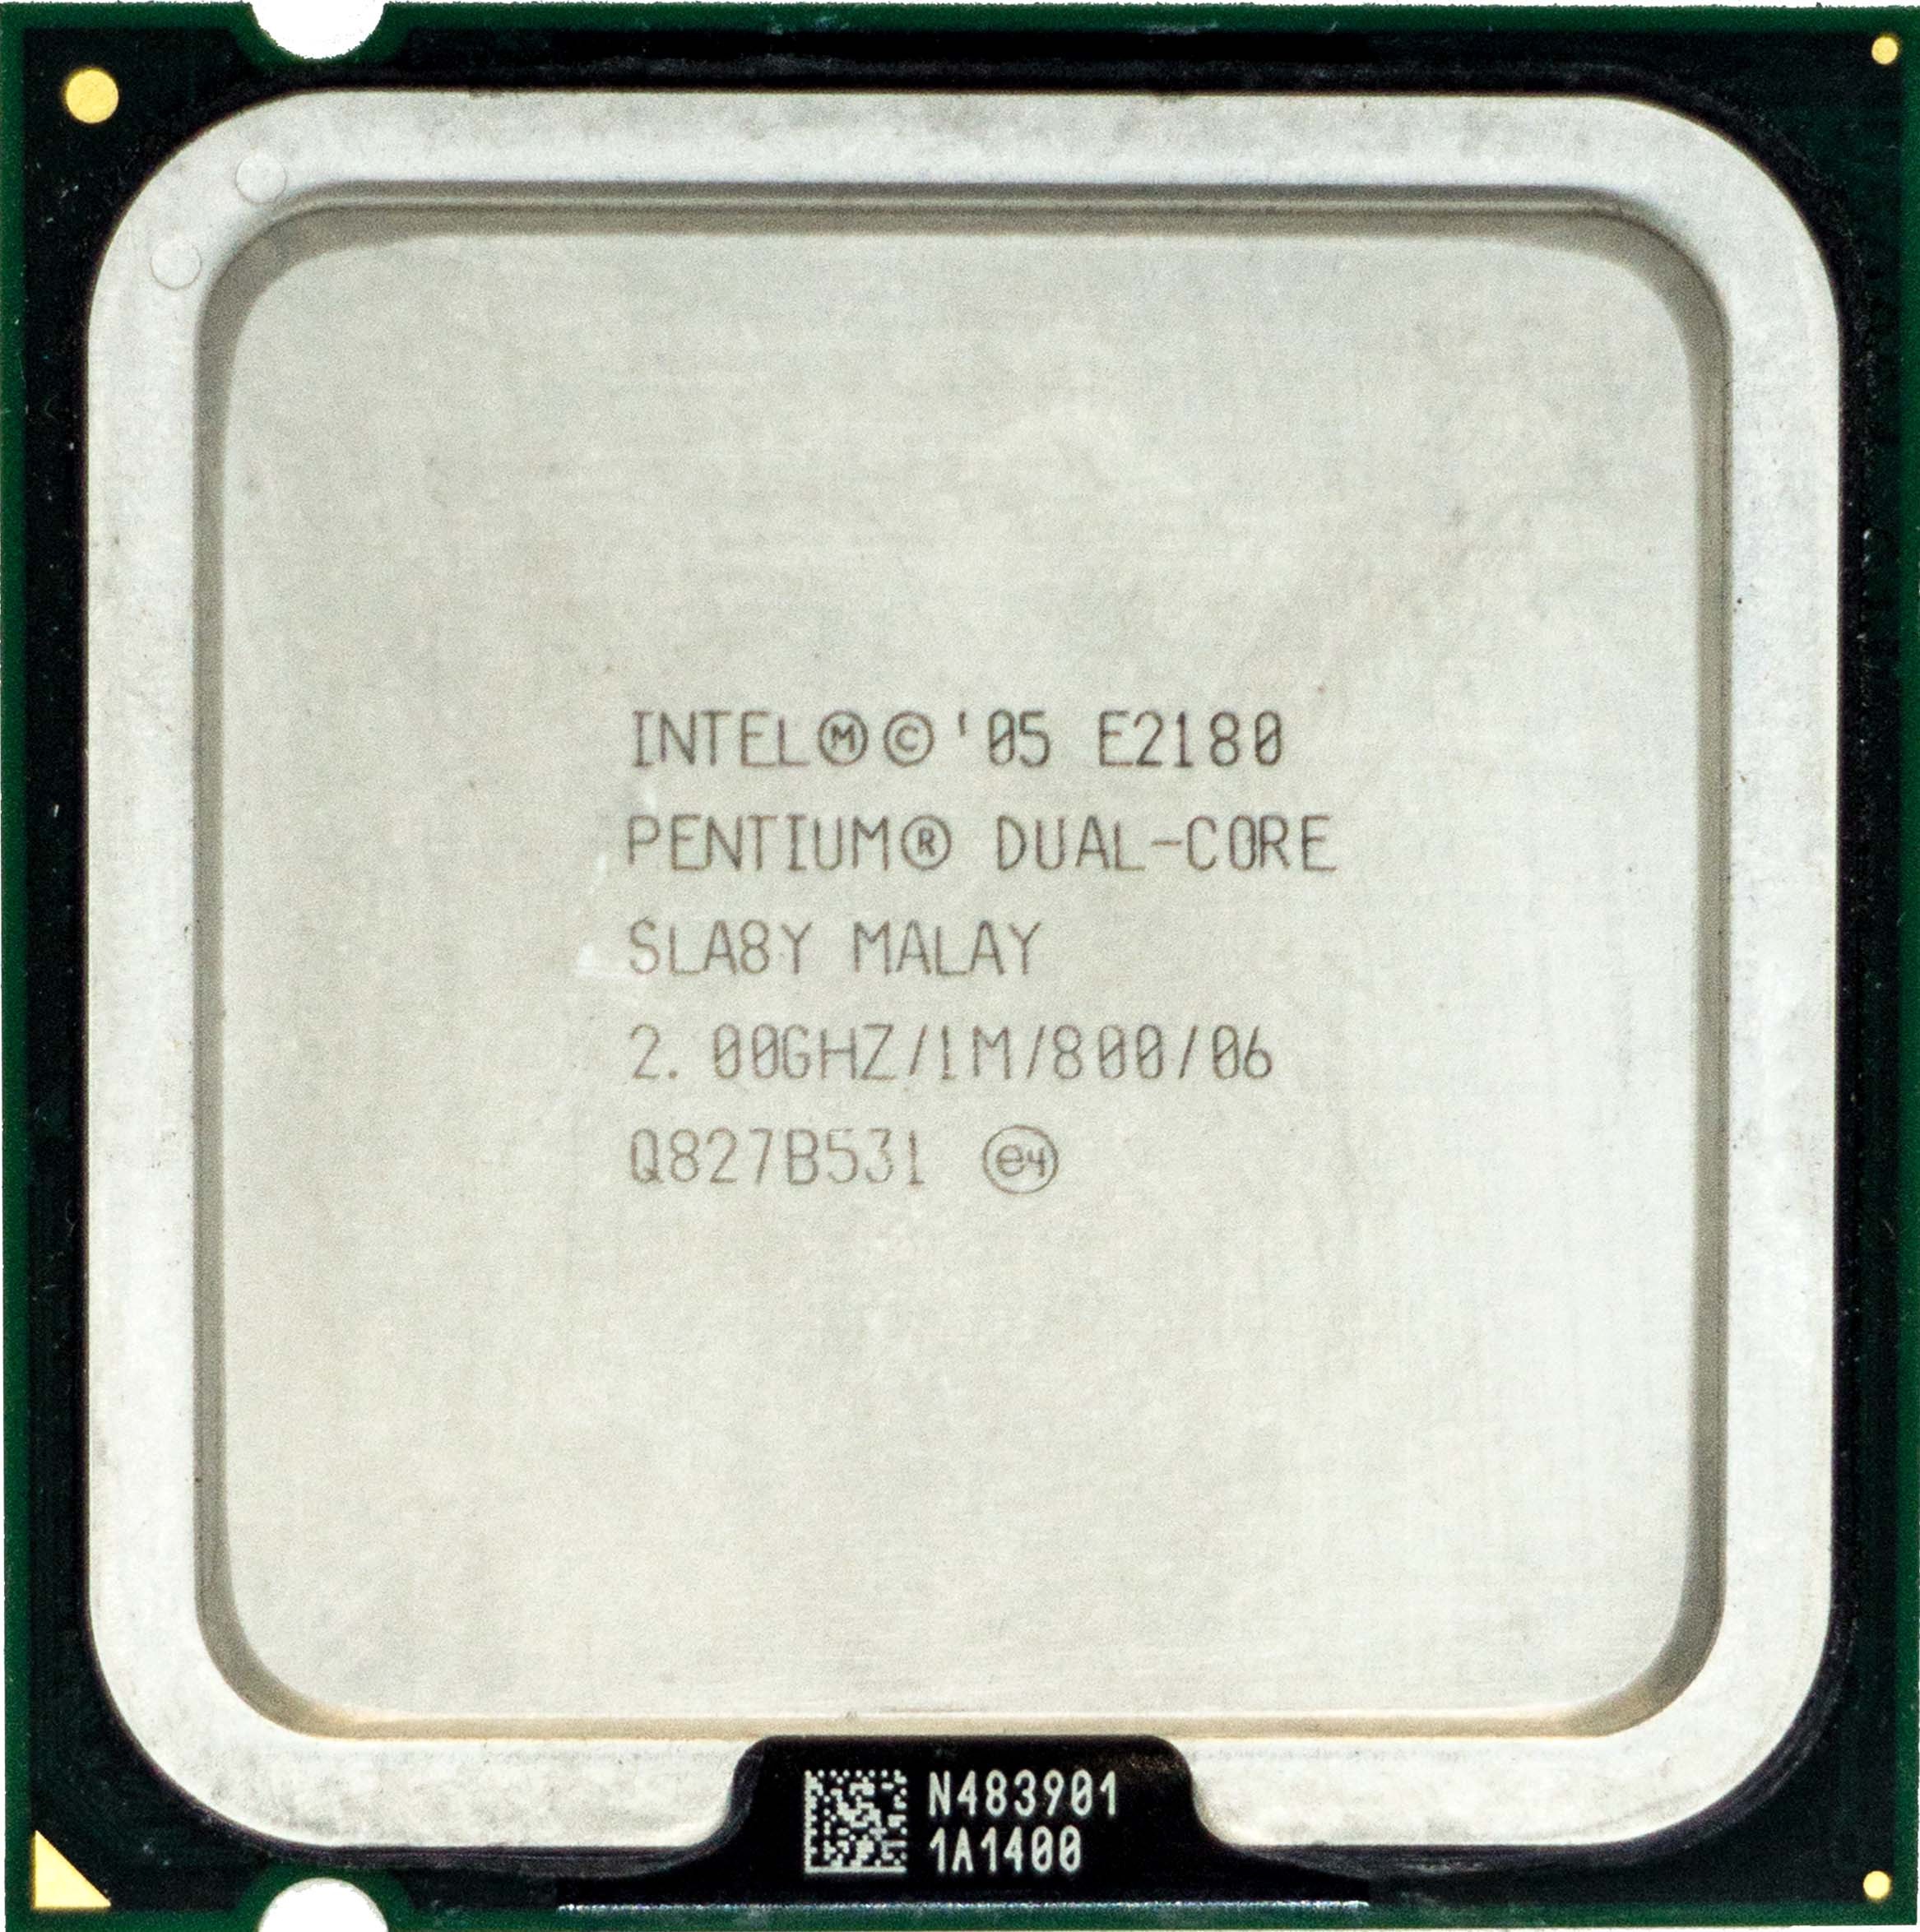 Intel Pentium Dual-Core E2180 2.00GHz 800MHz 1MB Socket 775 CPU 